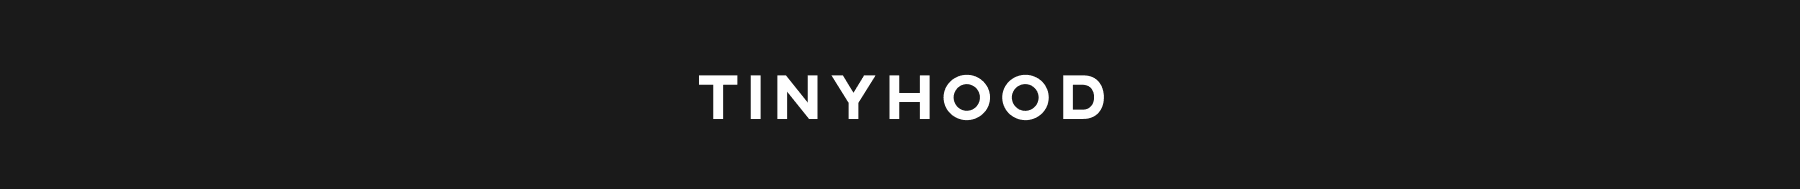 Tinyhood logo